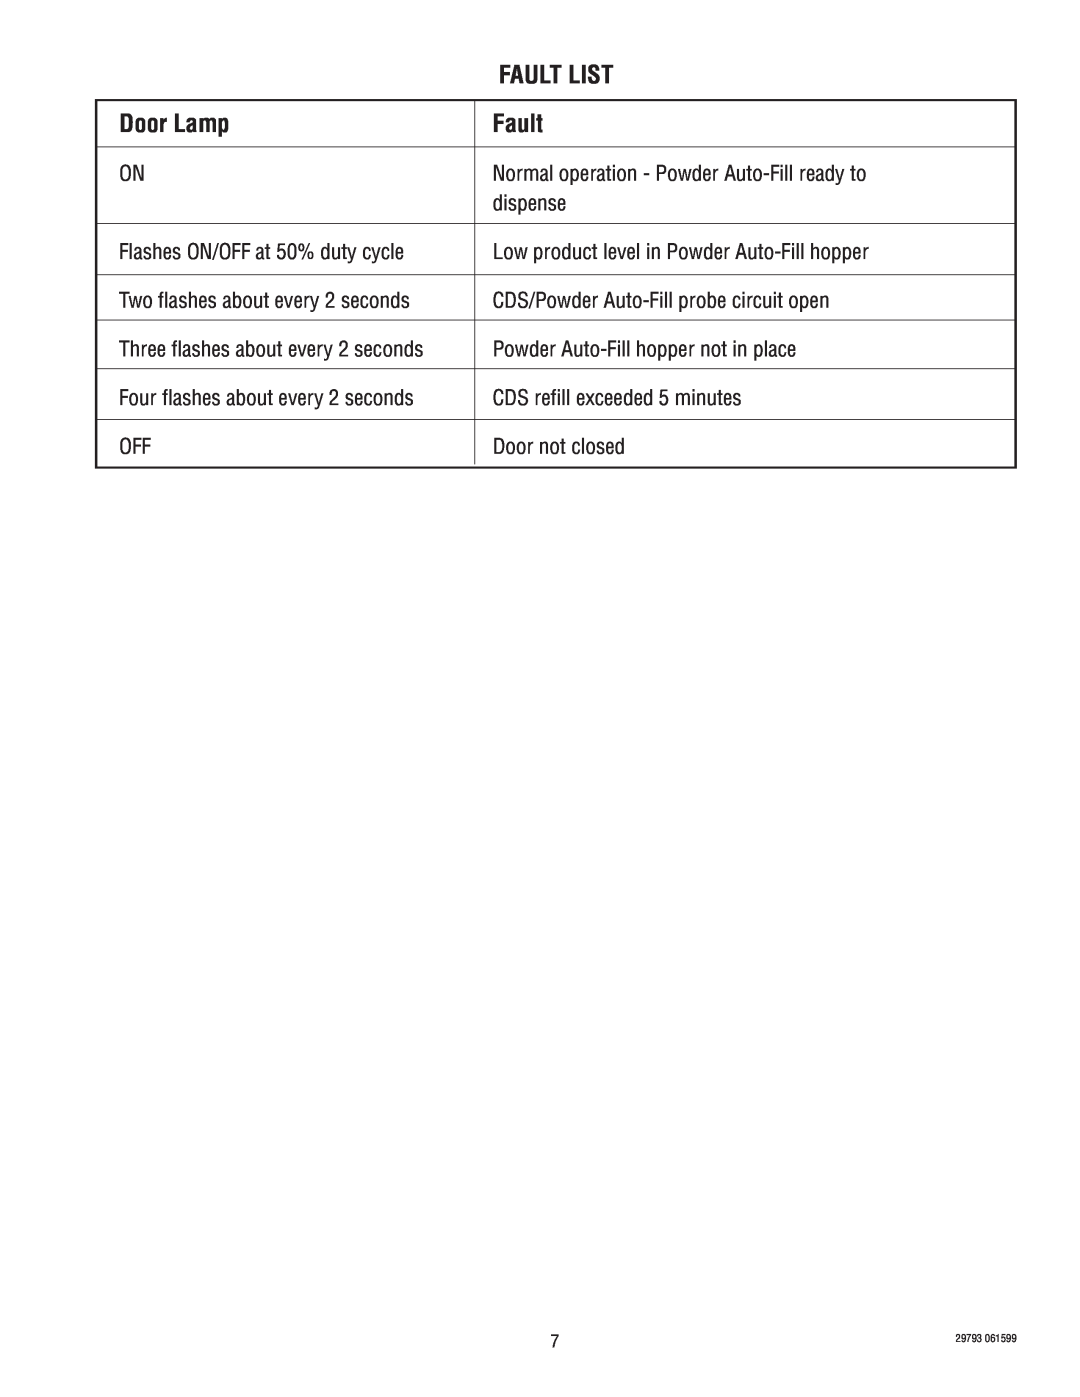 Bunn CDS-3 manual Fault List, Door Lamp 